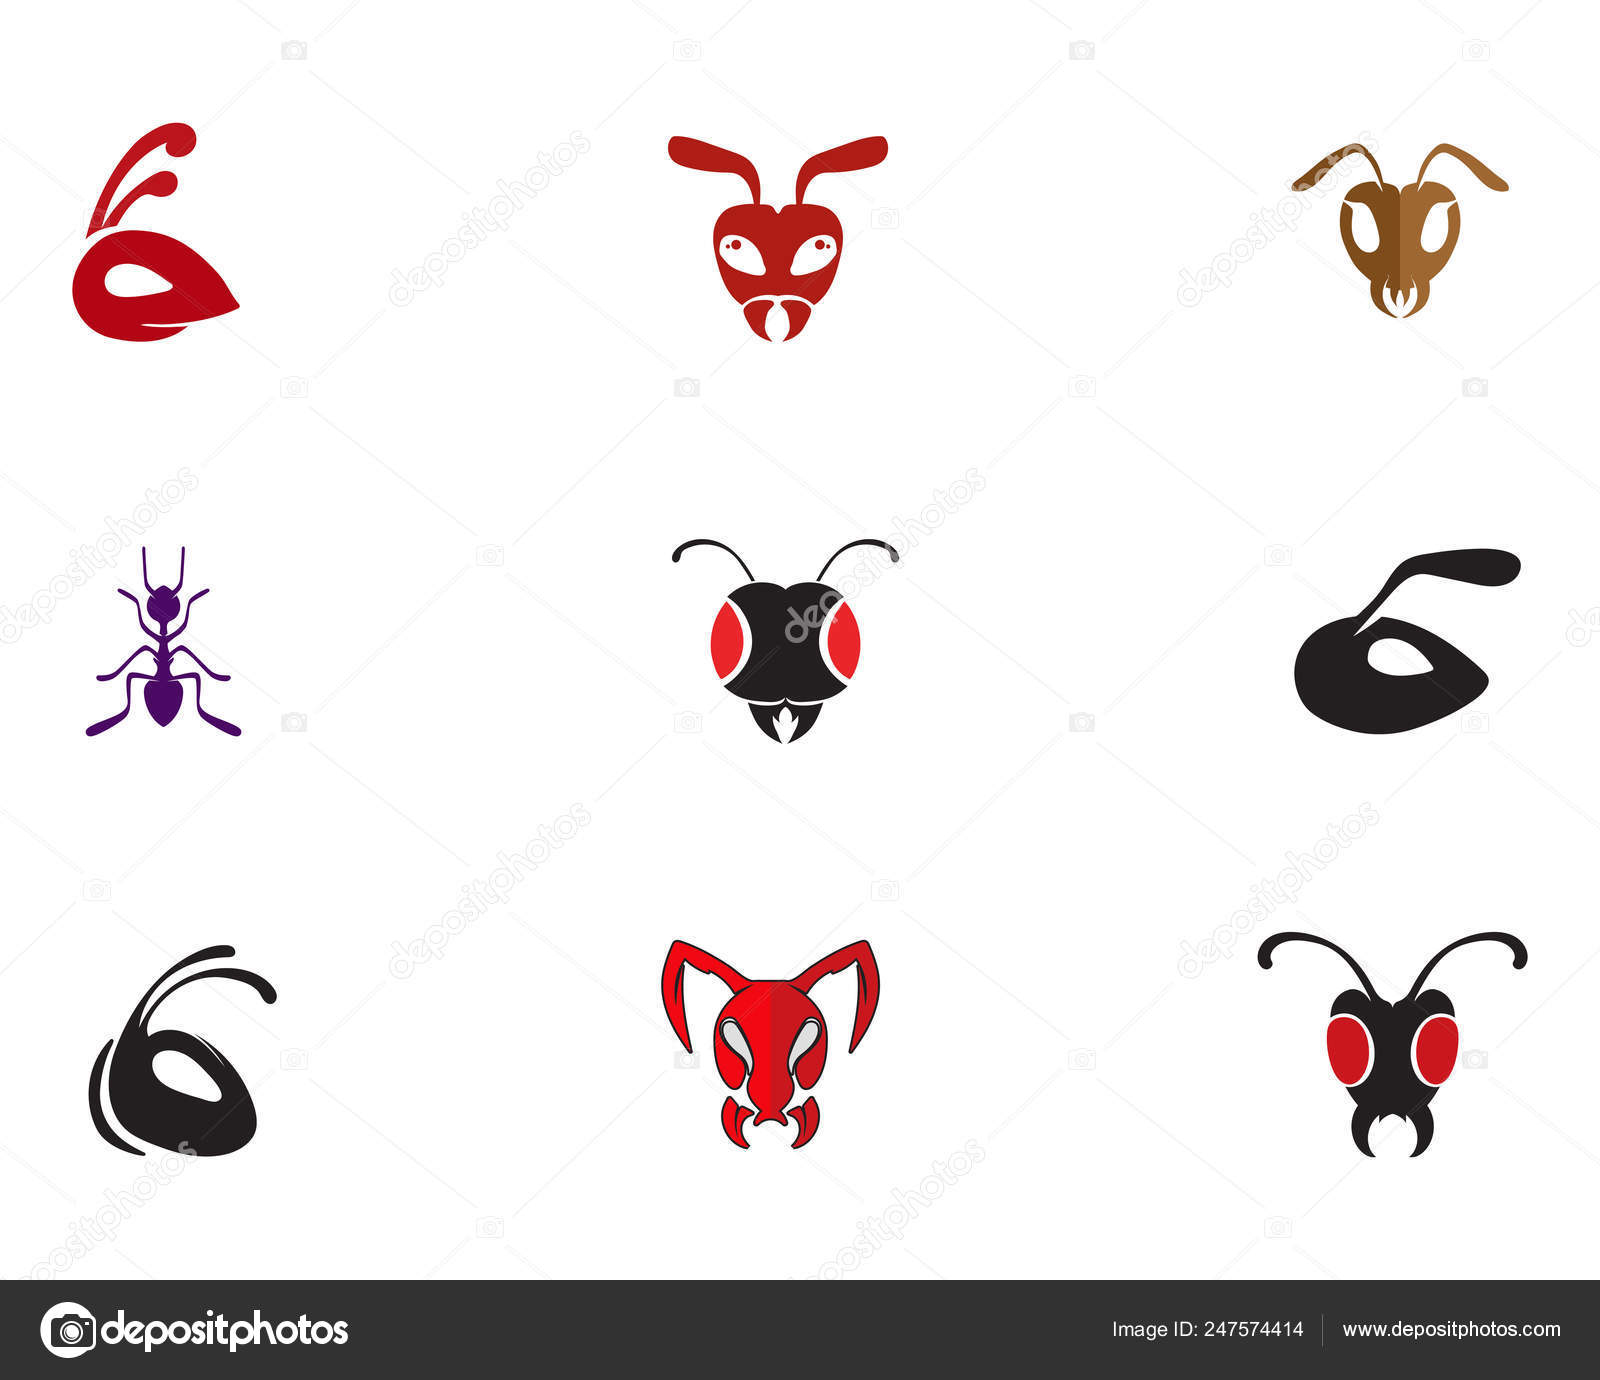 Cartoon ant head Vector Art Stock Images | Depositphotos